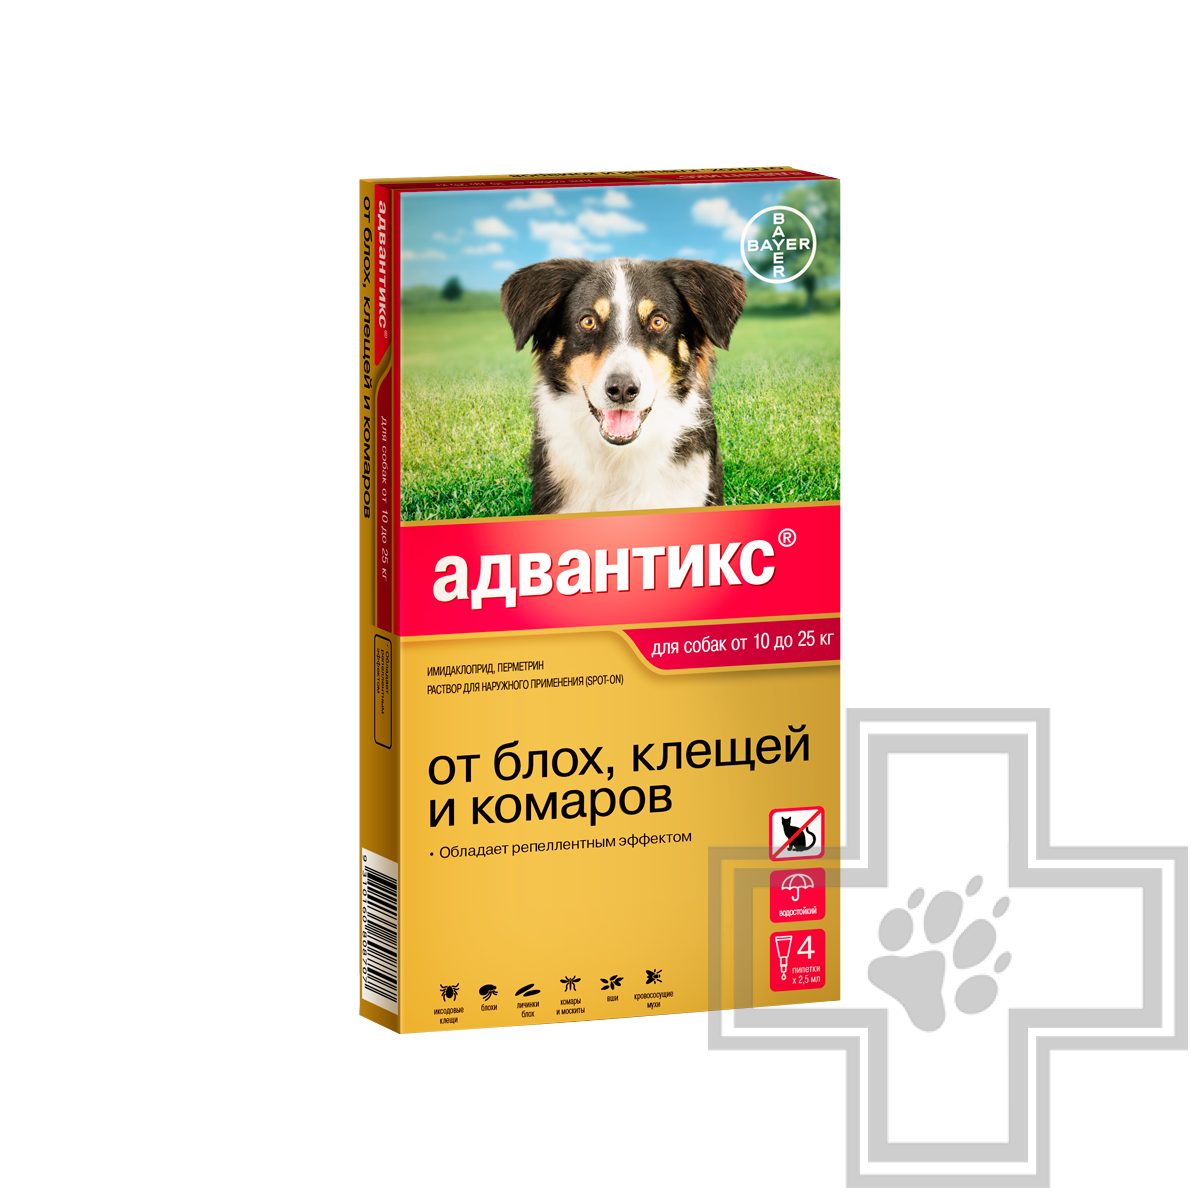 Адвантикс для собак до 4 кг. Адвантикс для собак весом от 10 до 25 кг,. Адвантикс для собак (4 пипетки) 10-25кг. Капли от блох Адвантикс для собак до 5 кг. Advantix капли для собак.